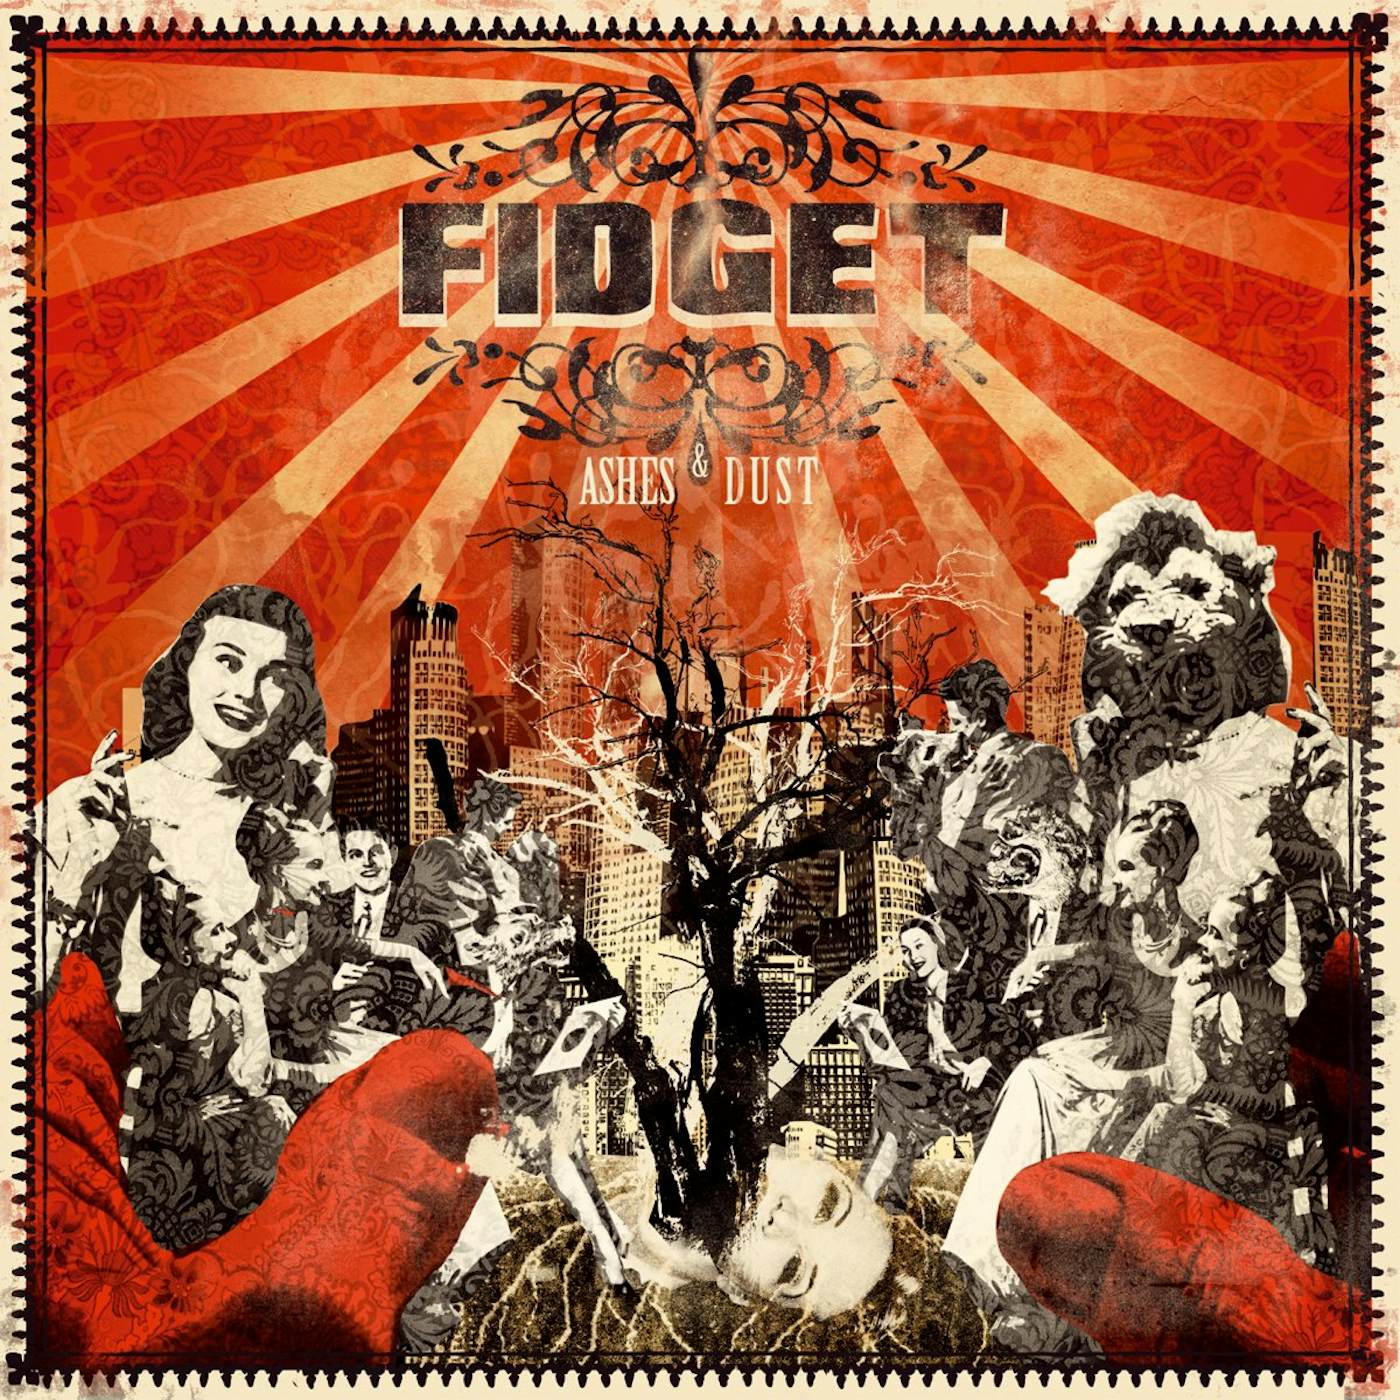 Fidget - Ashes & Dust - CD (2008)